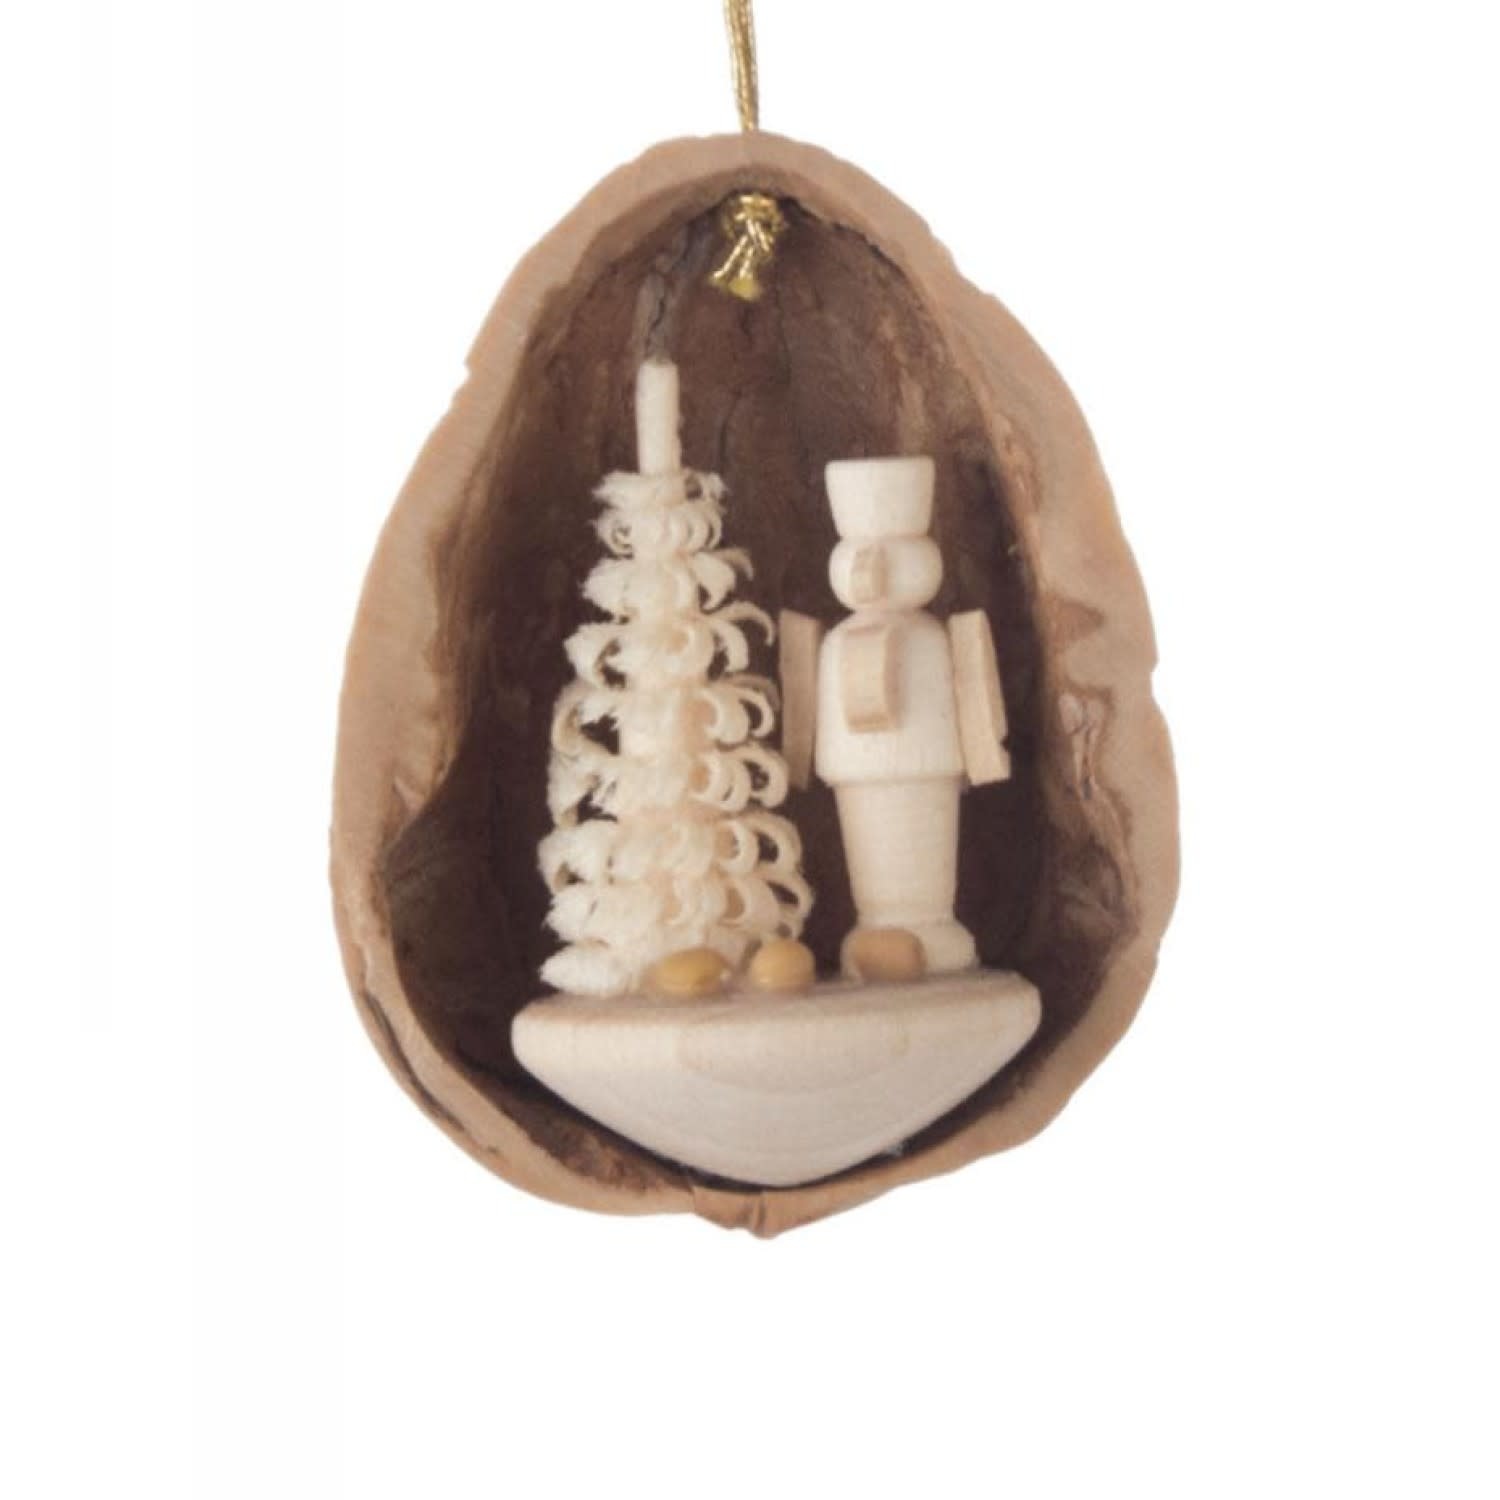 199/442  Walnut shell Ornament with nutcracker